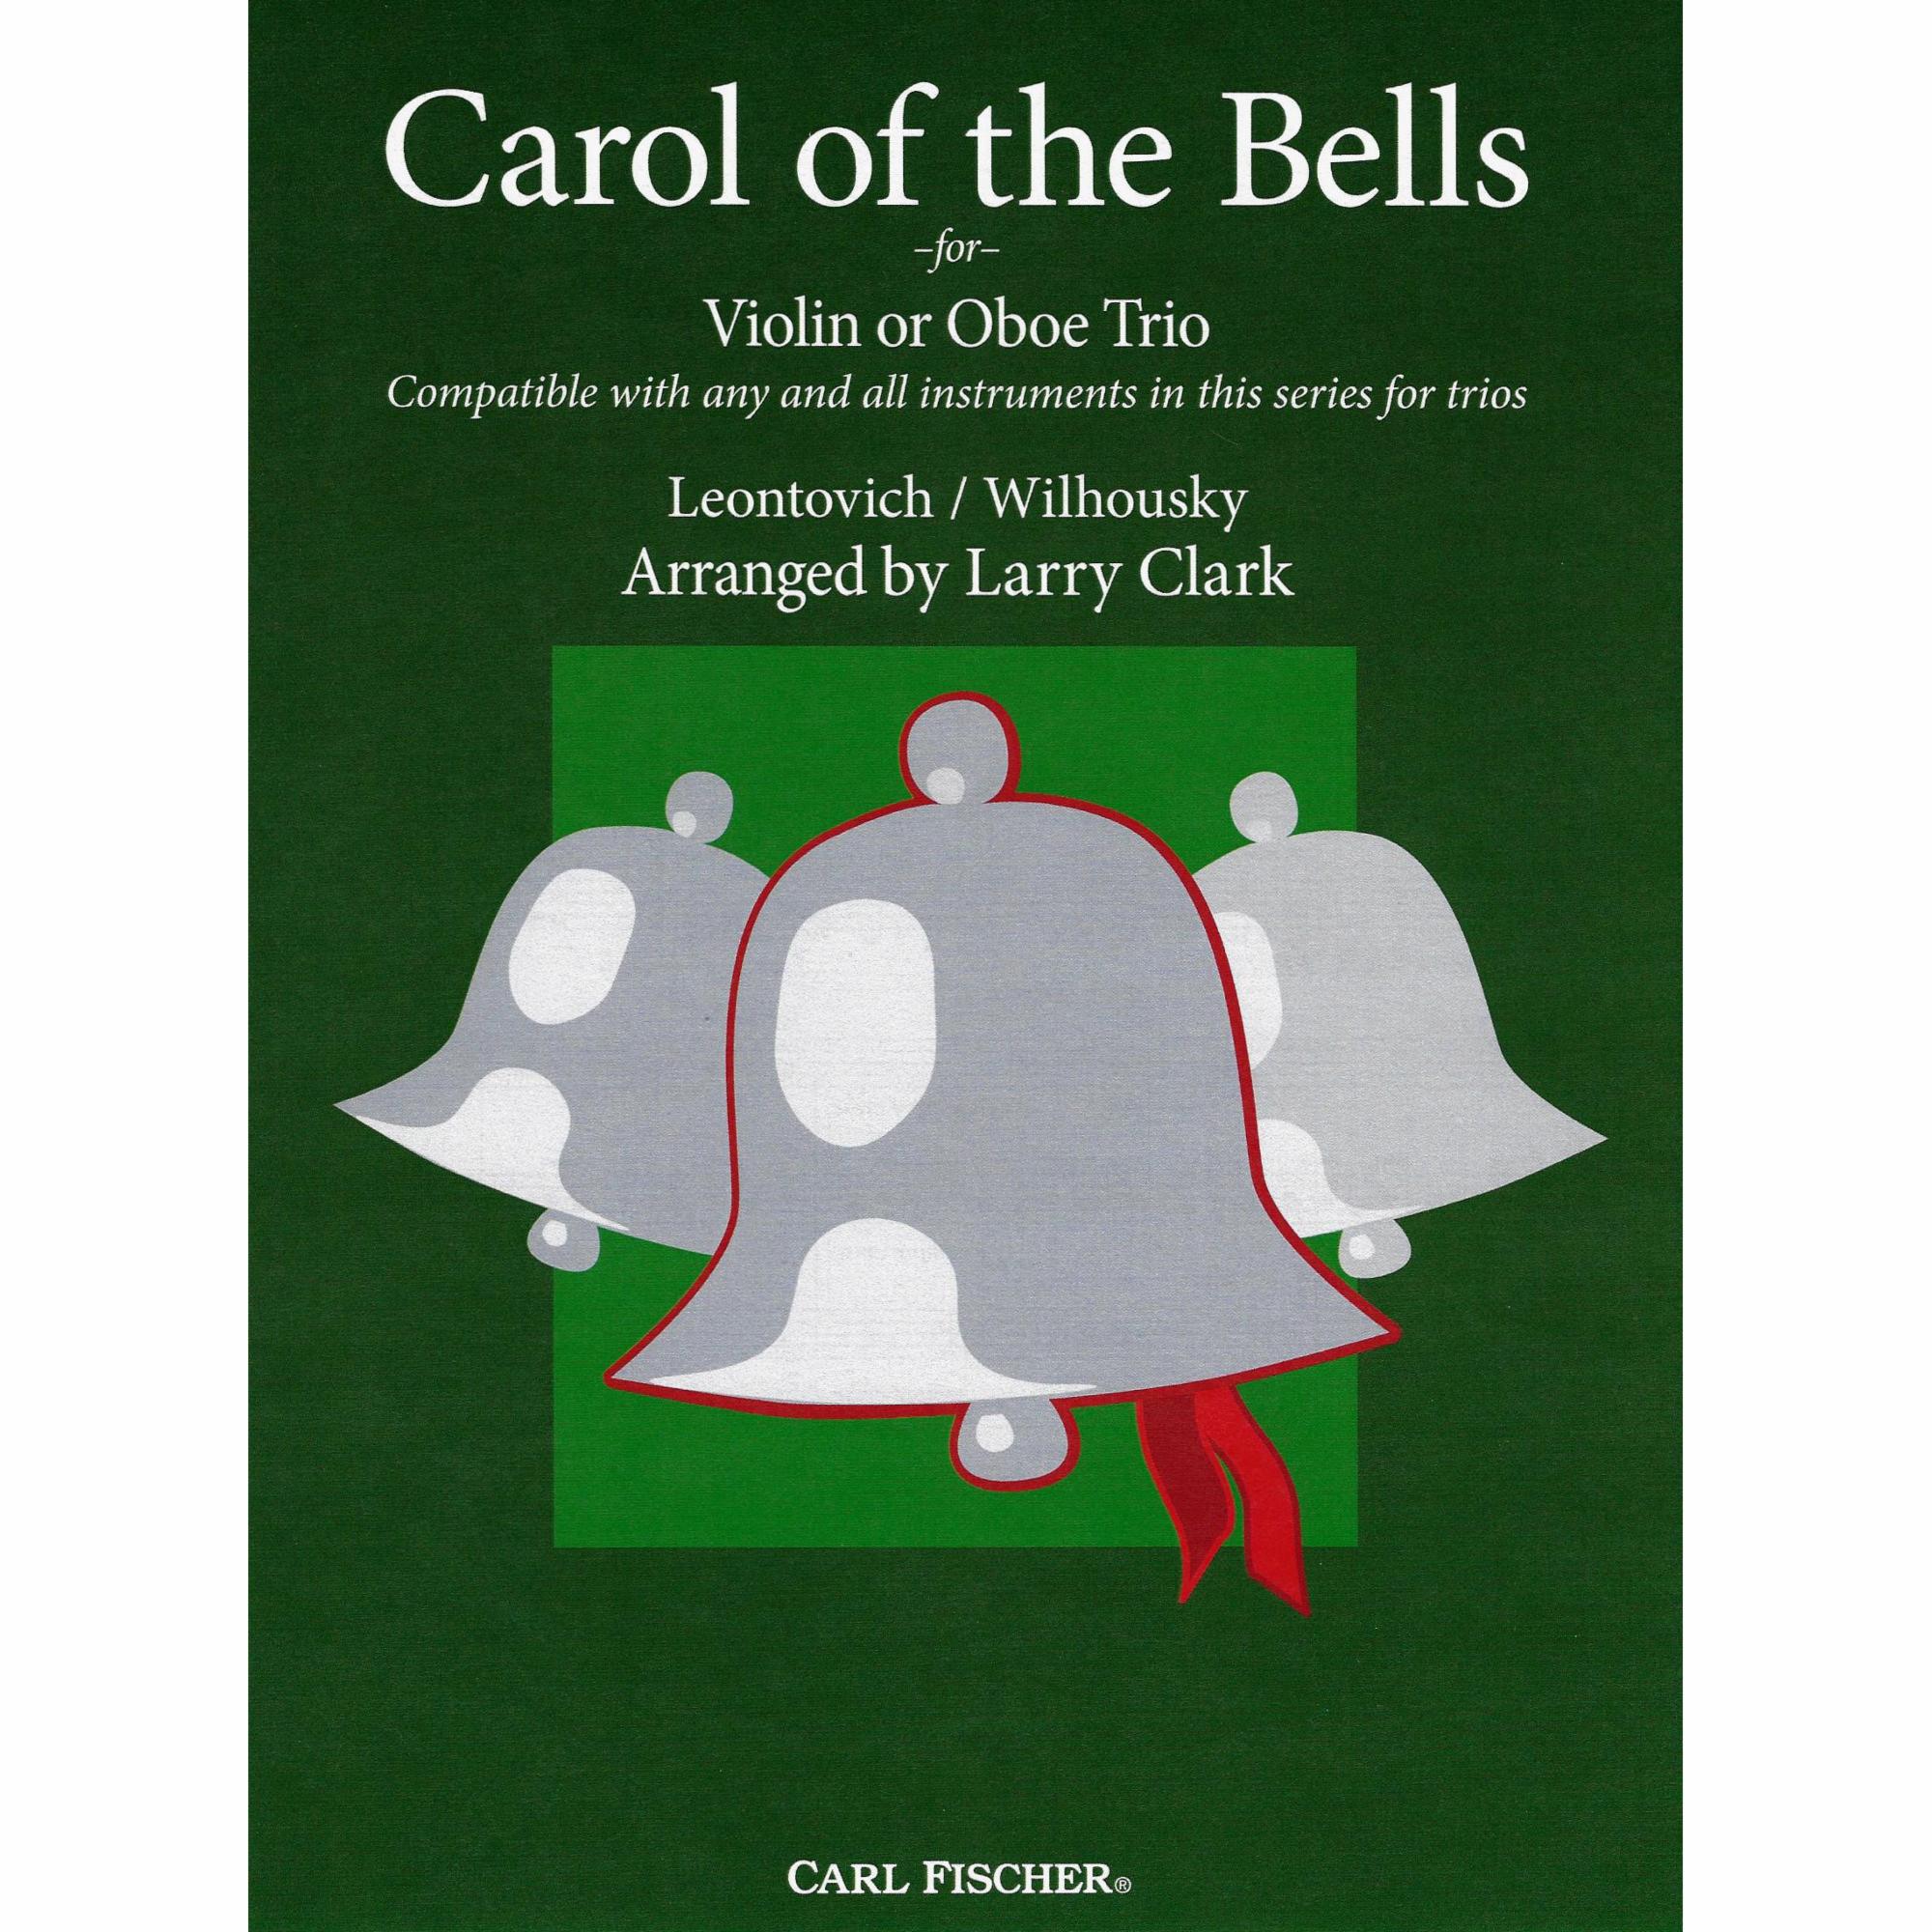 Carol of the Bells for Strings